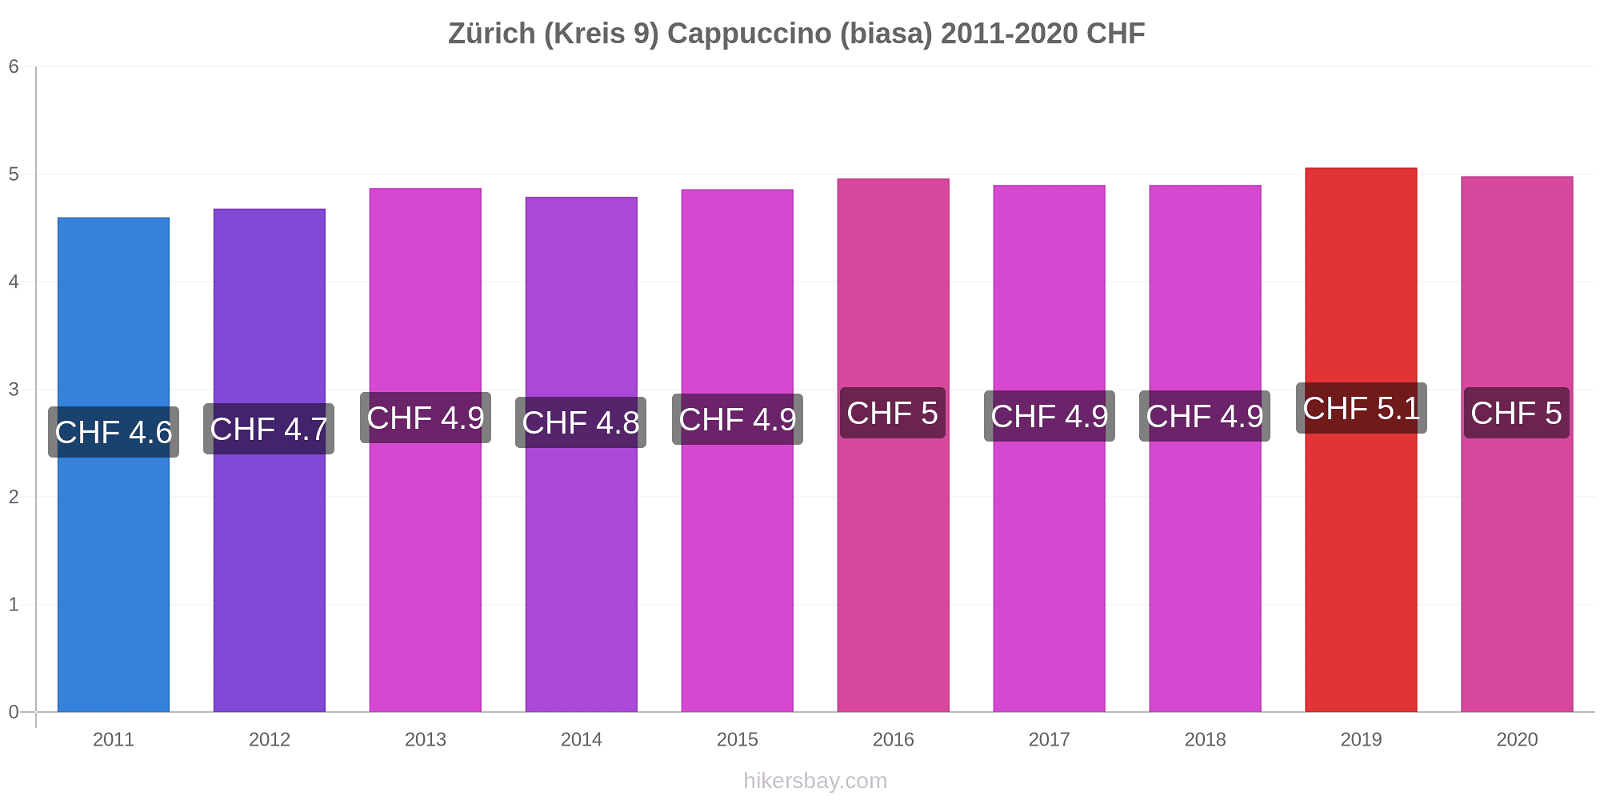 Zürich (Kreis 9) perubahan harga Cappuccino (biasa) hikersbay.com